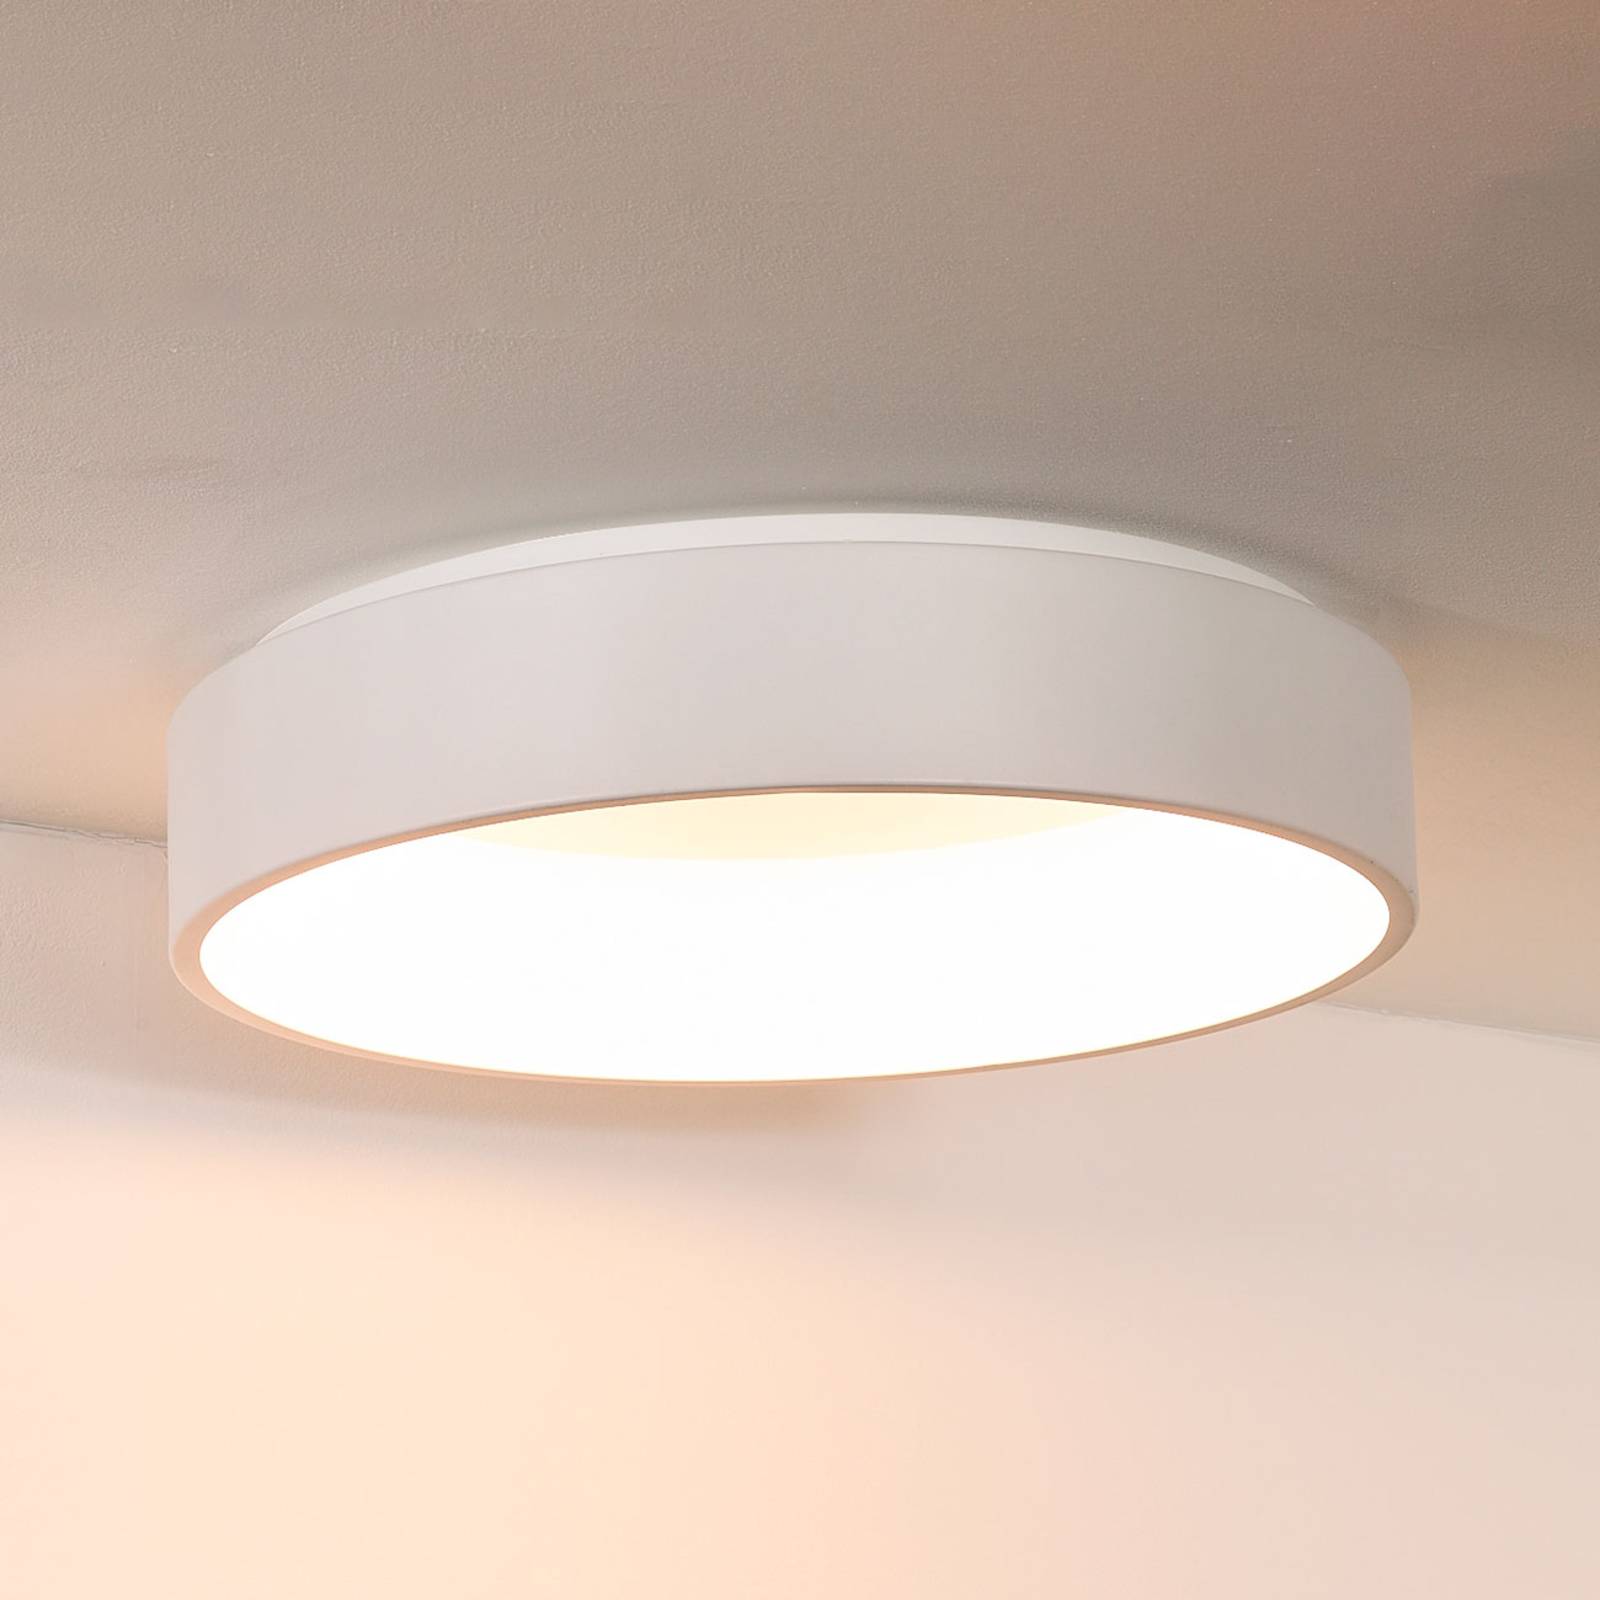 Lampa sufitowa LED Talowe, biała, Ø 60 cm